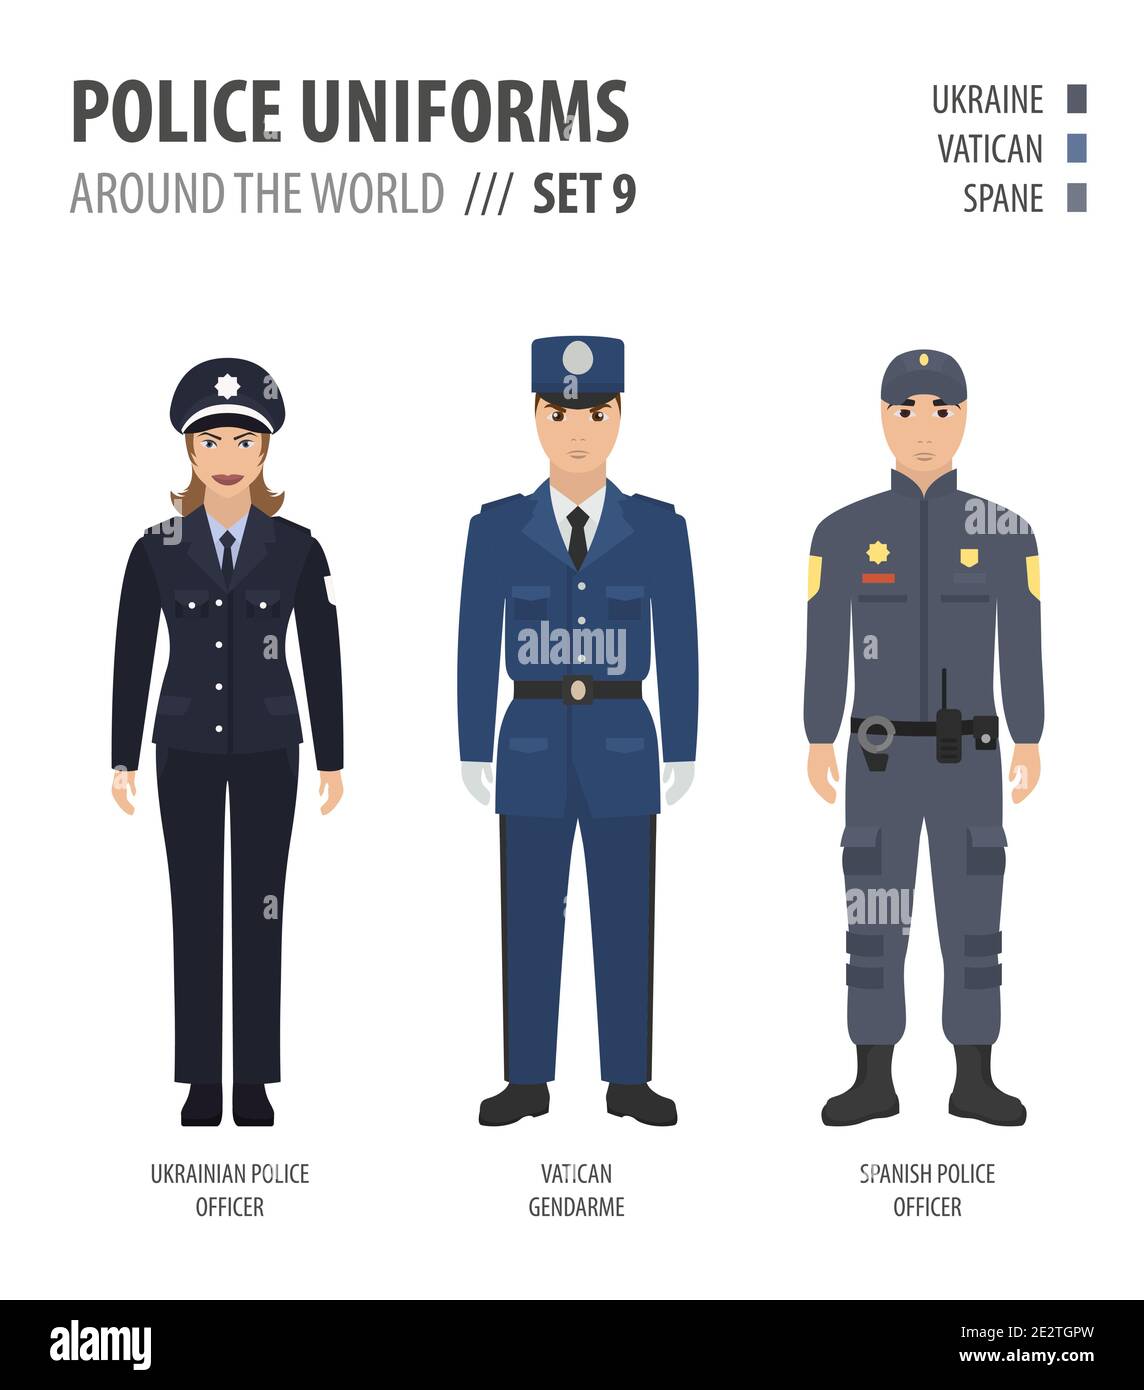 3,049 Police Uniform Shirt Images, Stock Photos, 3D objects, & Vectors